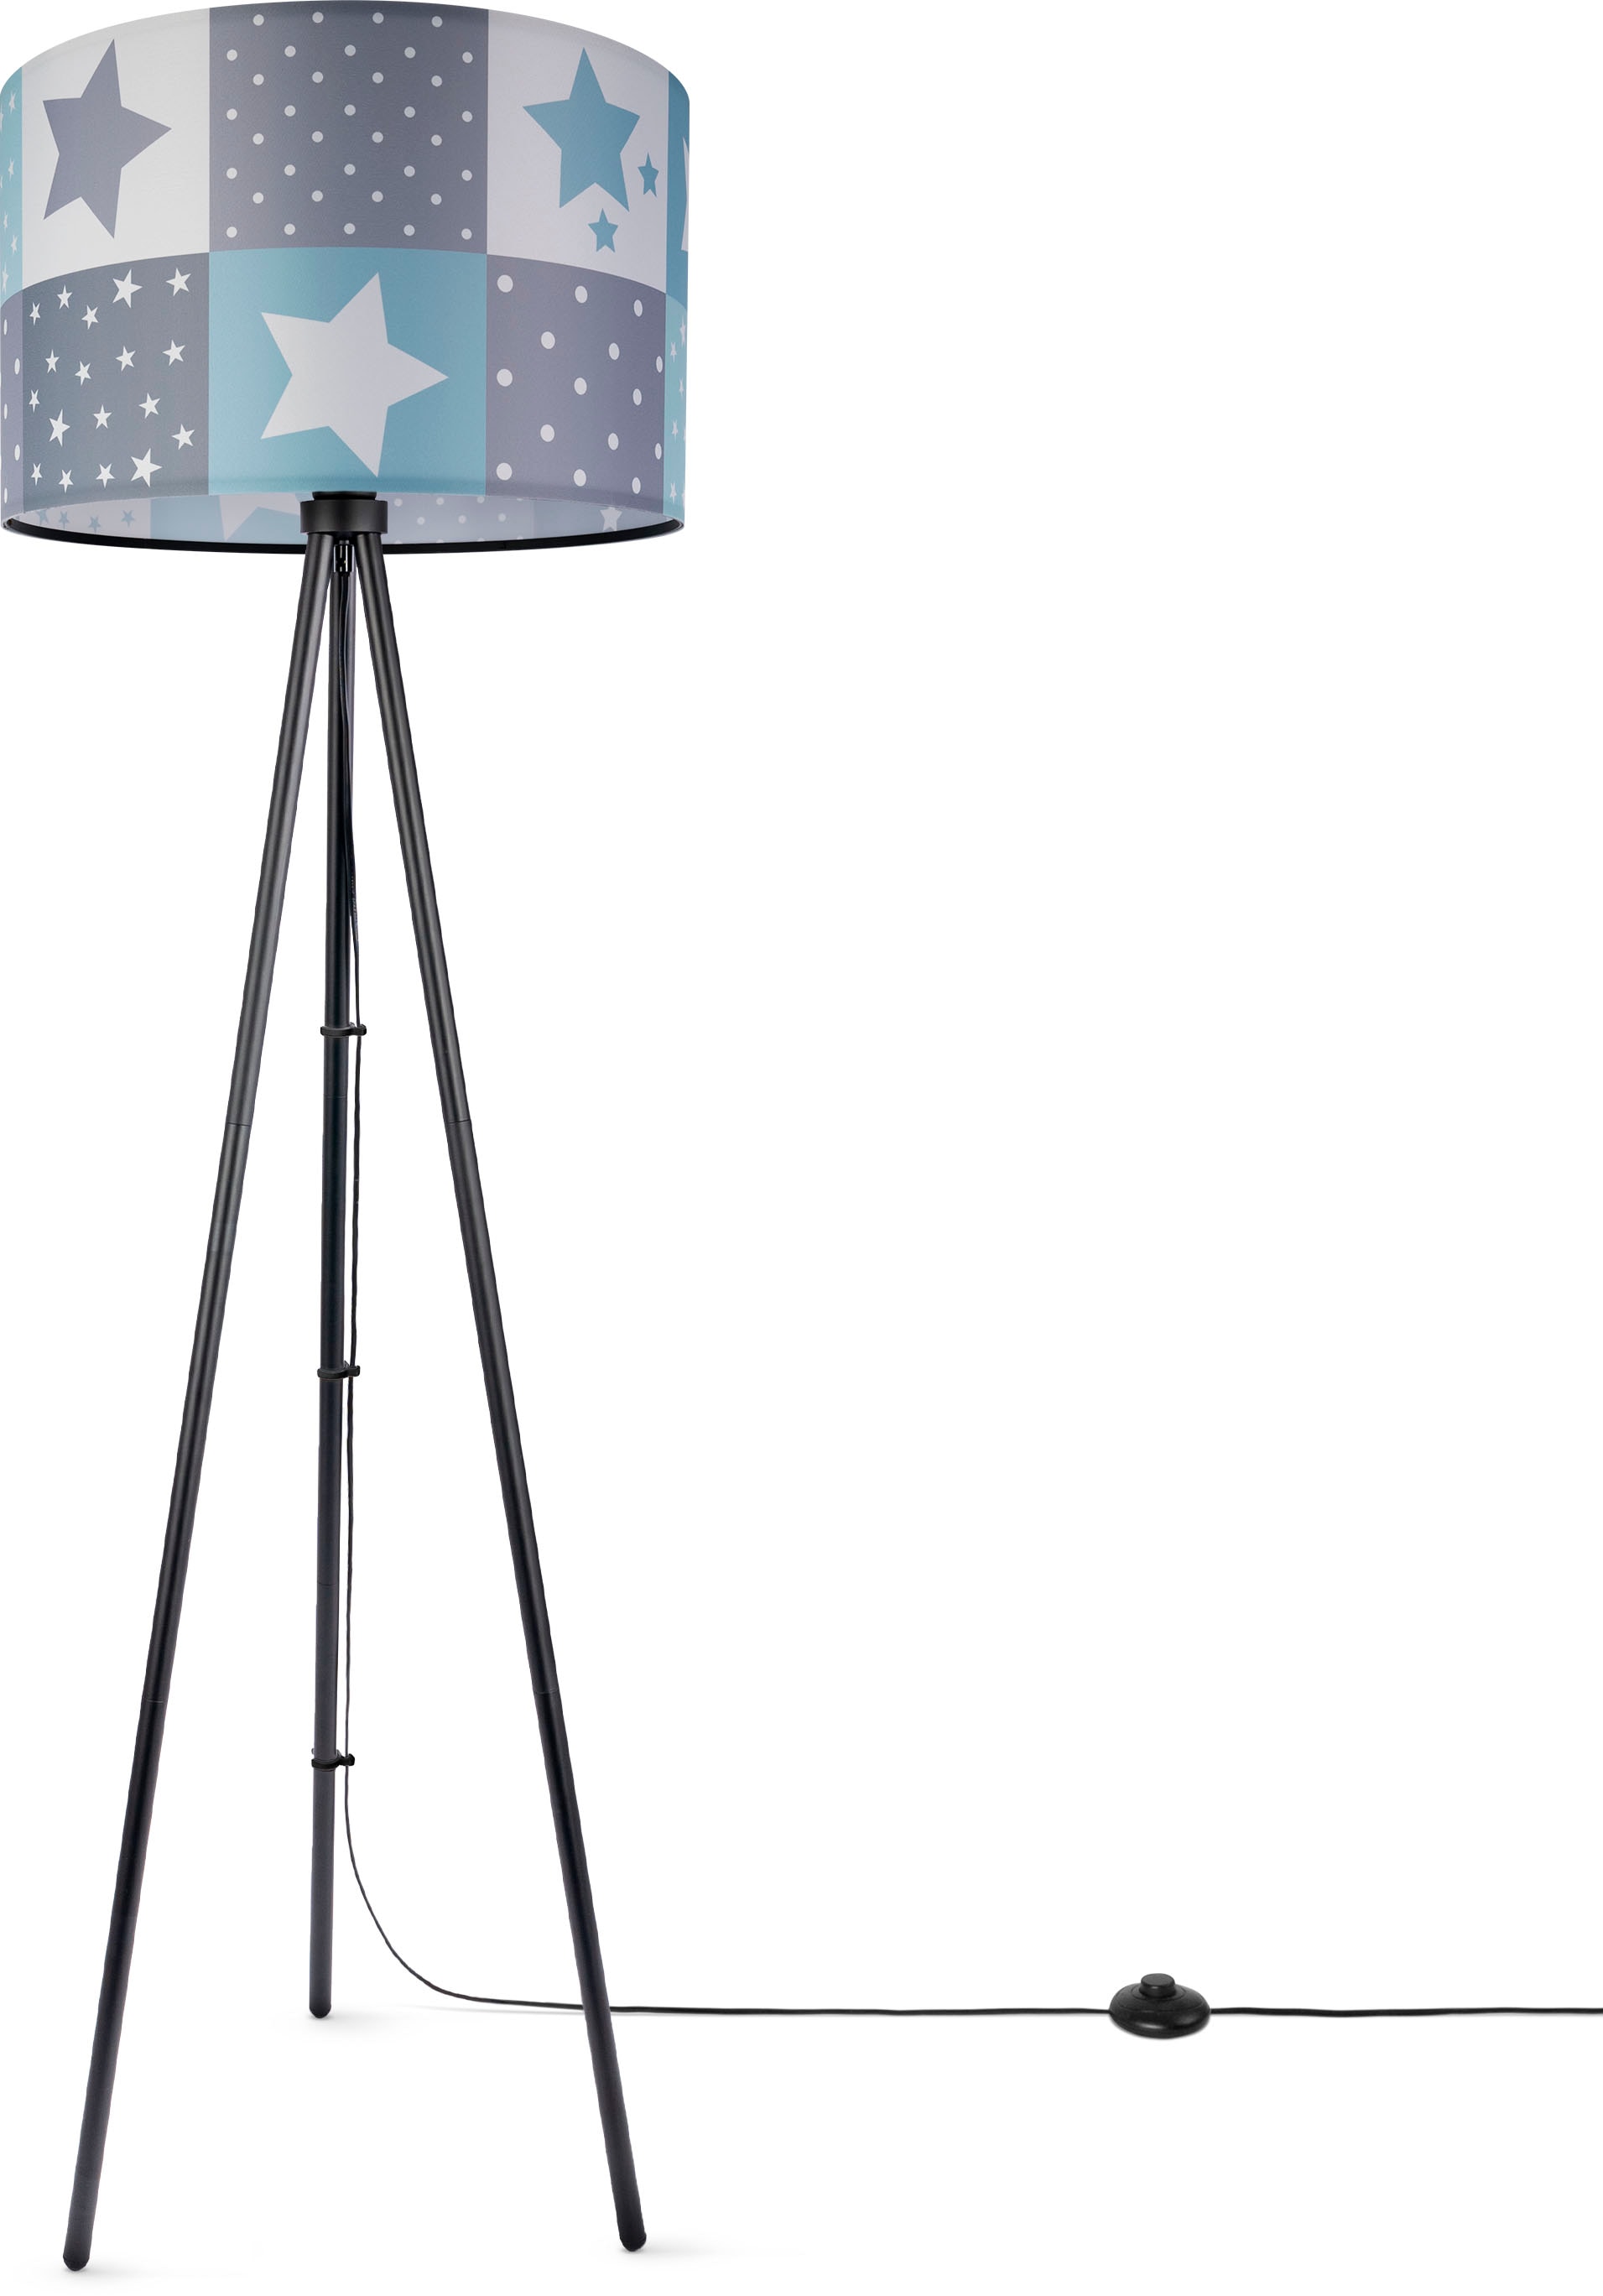 »Trina E27 Sternen Lampe Stehleuchte Kinderzimmer Stehlampe Cosmo«, Paco Motiv, Home OTTO Kinderlampe LED bei